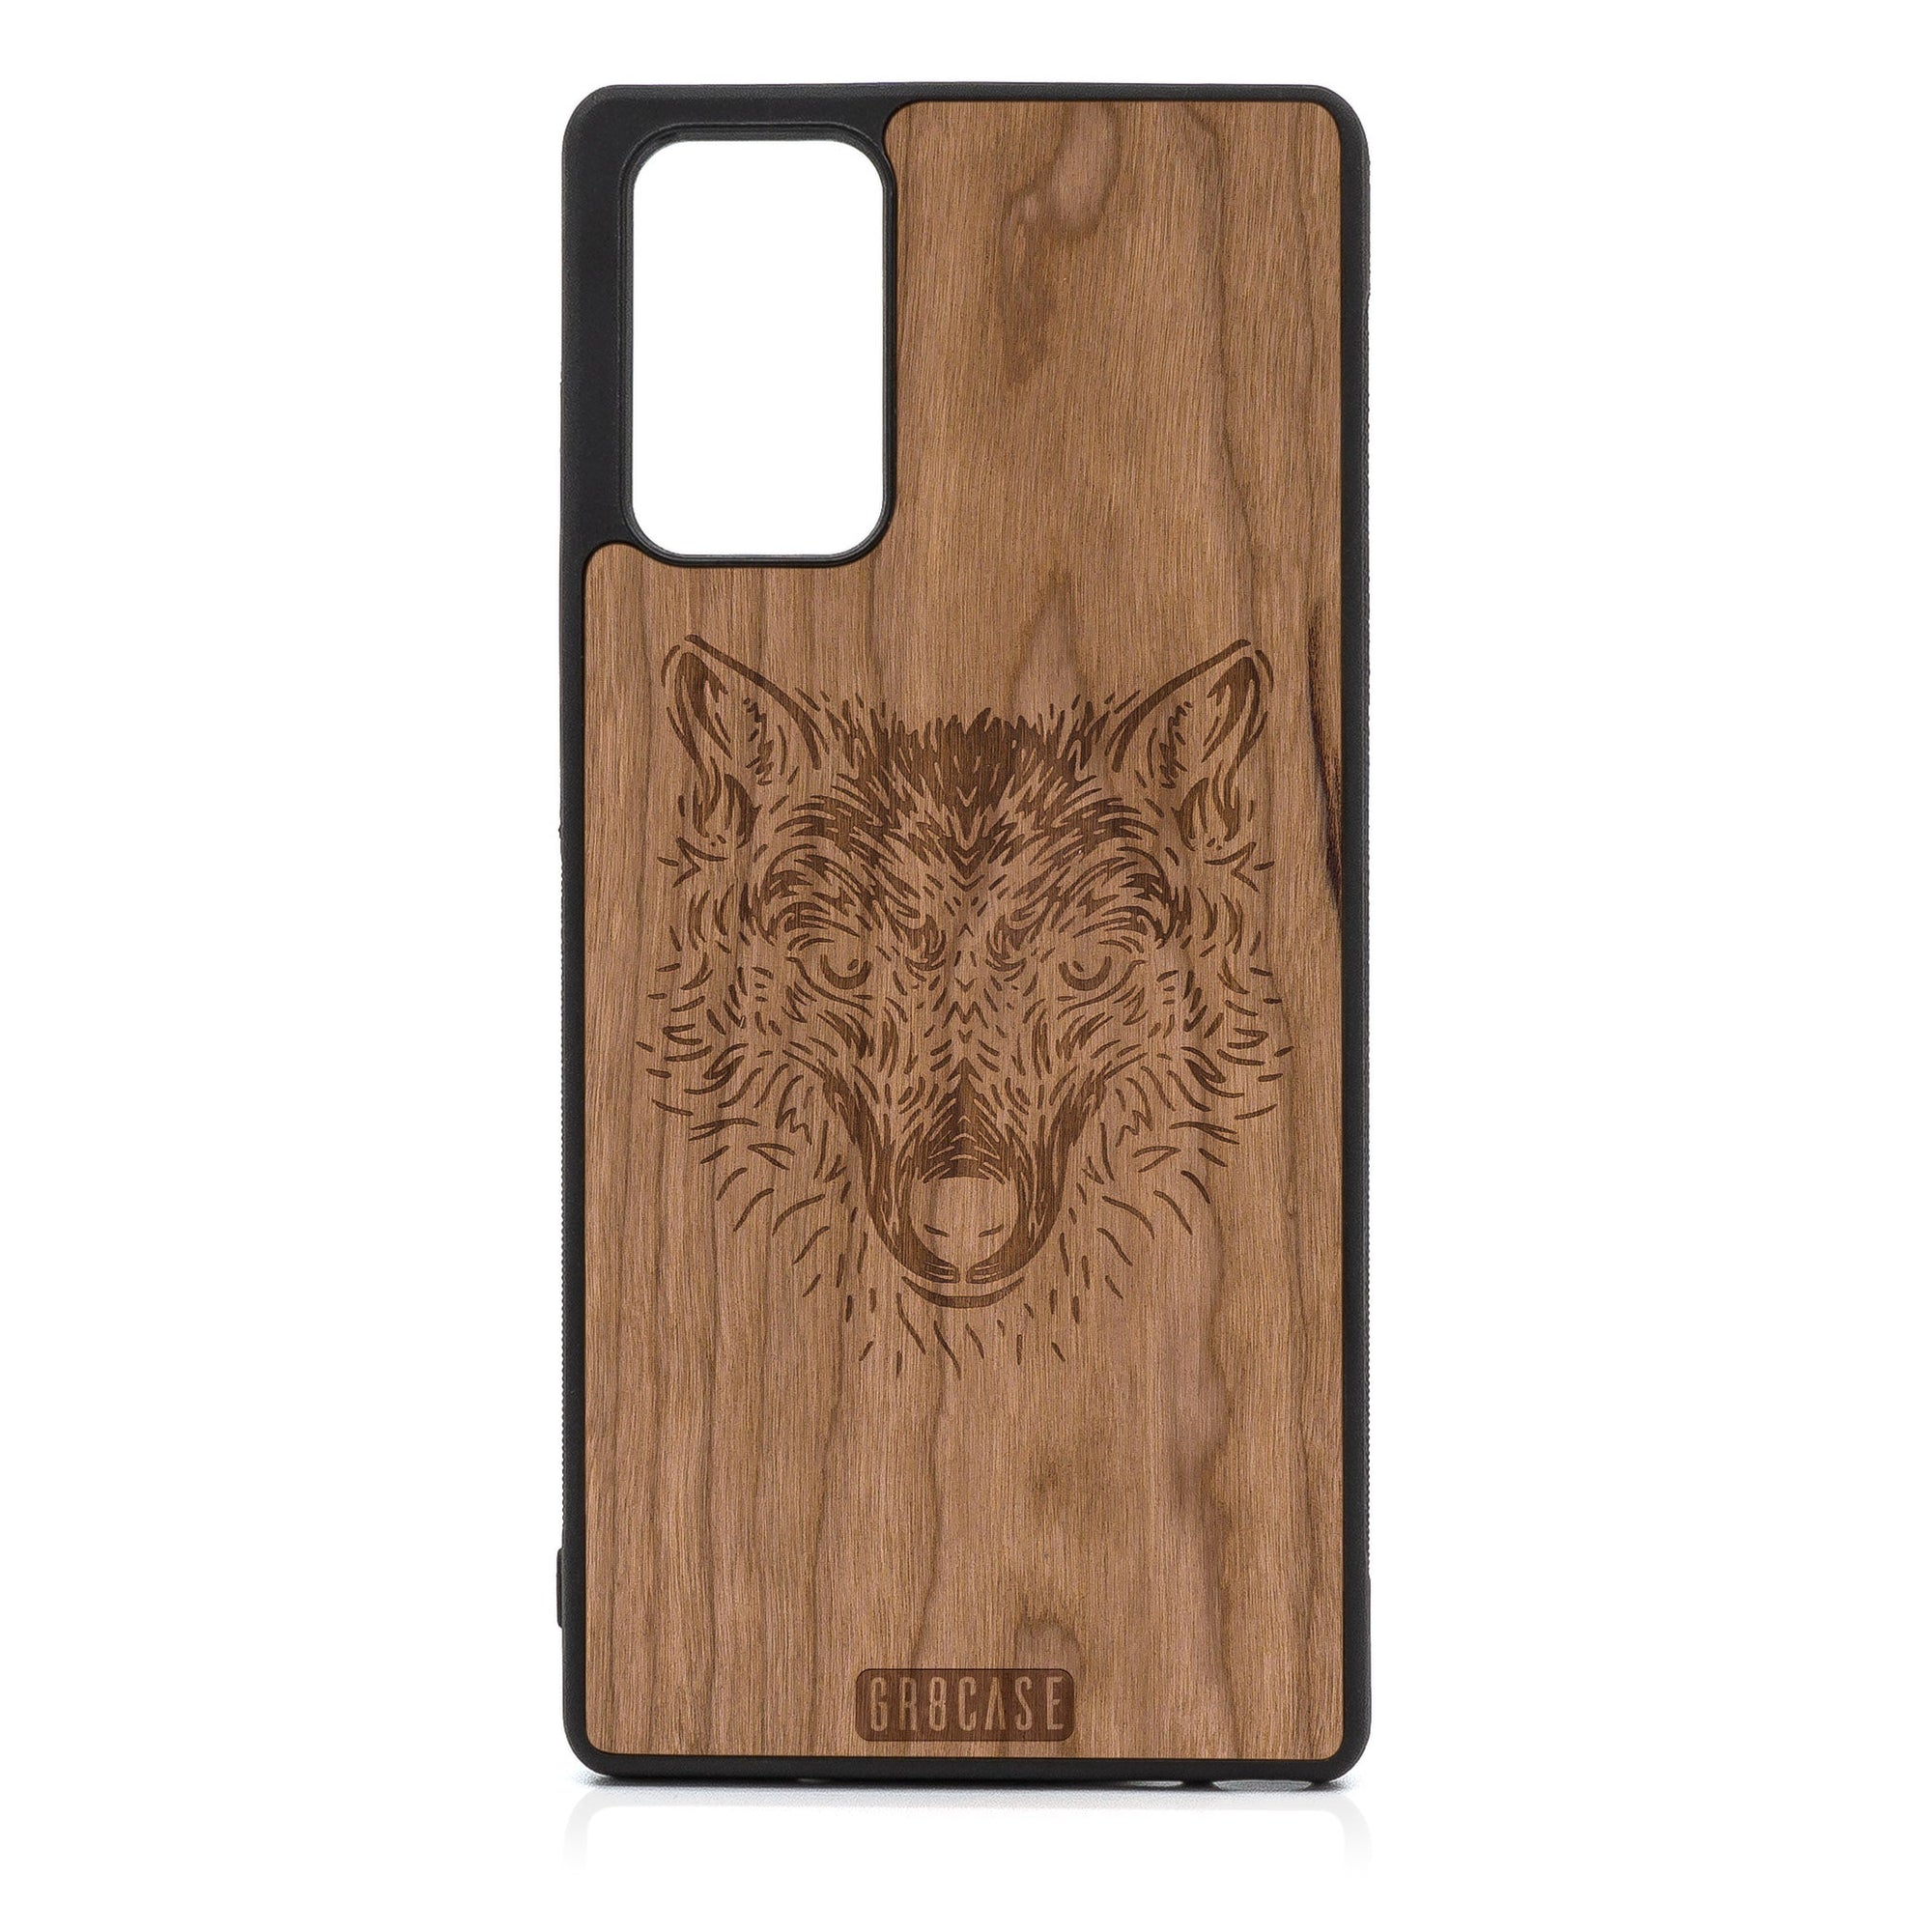 Furry Wolf Design Wood Case For Samsung Galaxy A52 5G